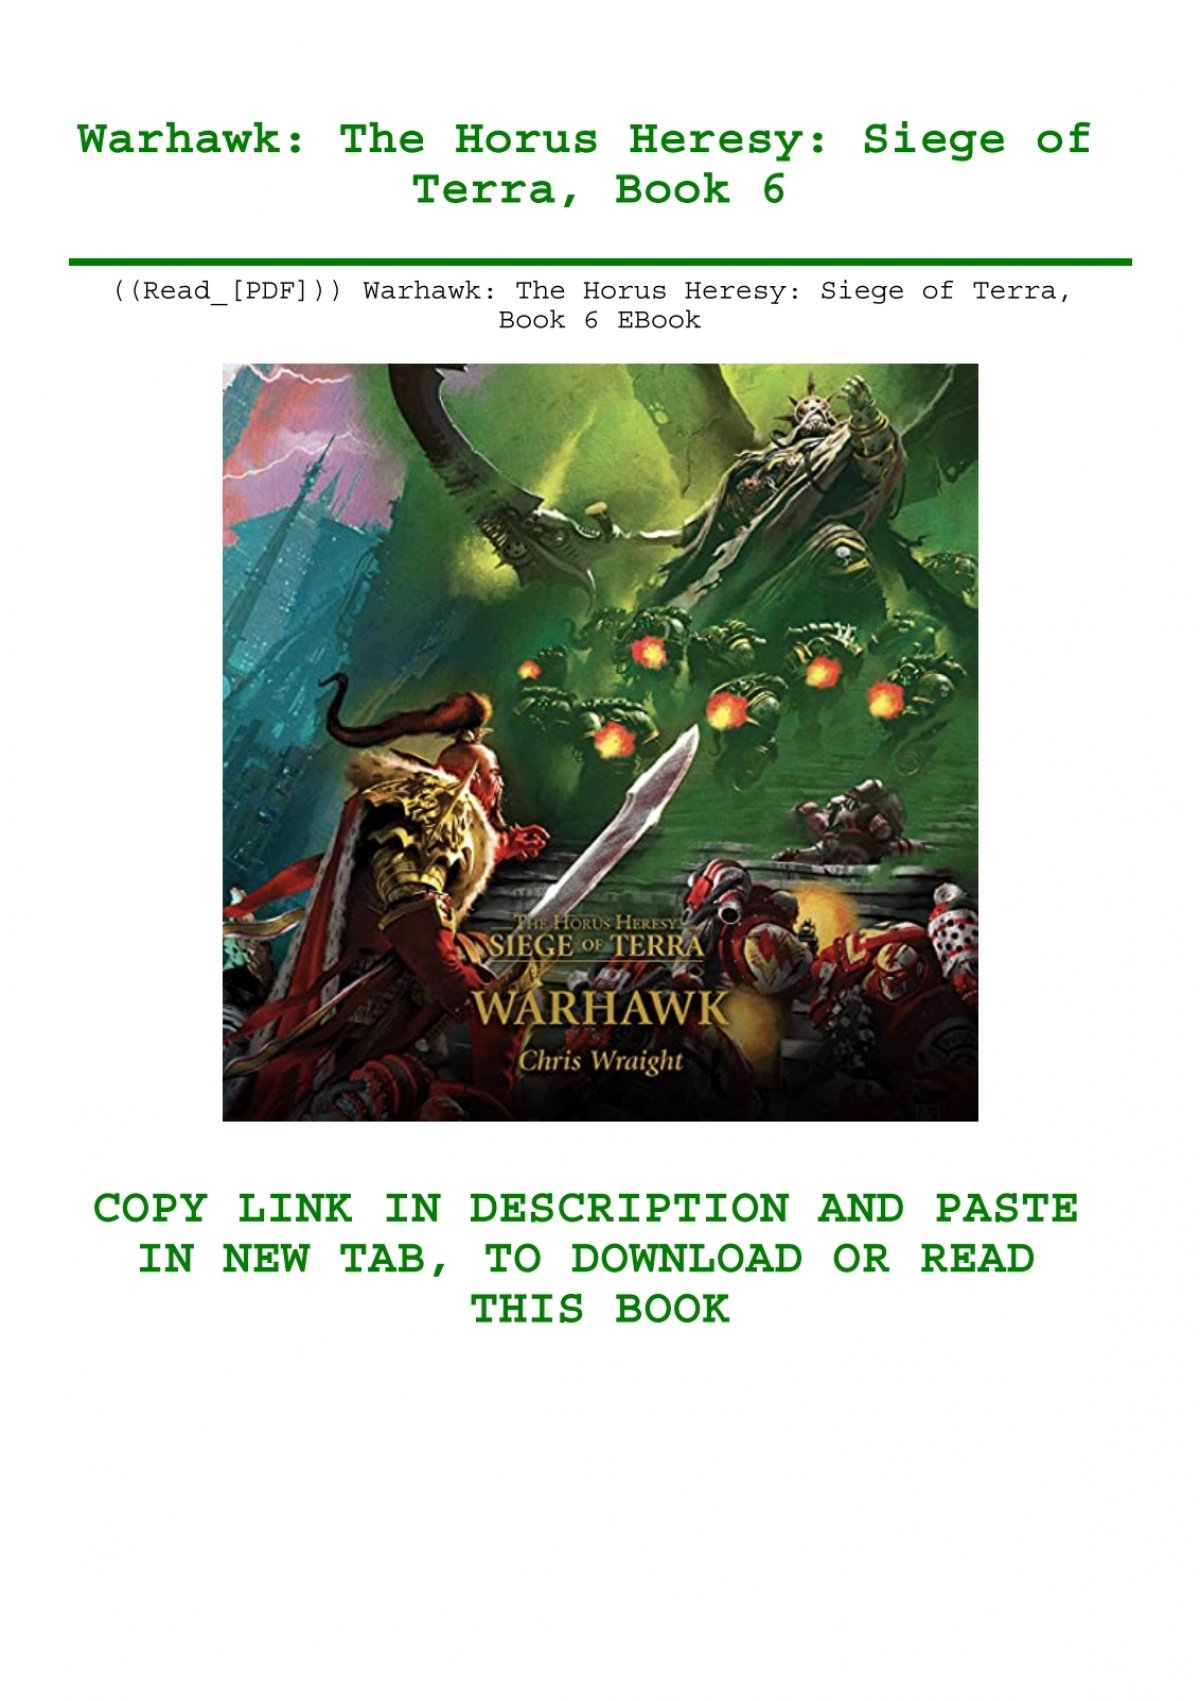 Read Pdf Warhawk The Horus Heresy Siege Of Terra Book 6 Ebook